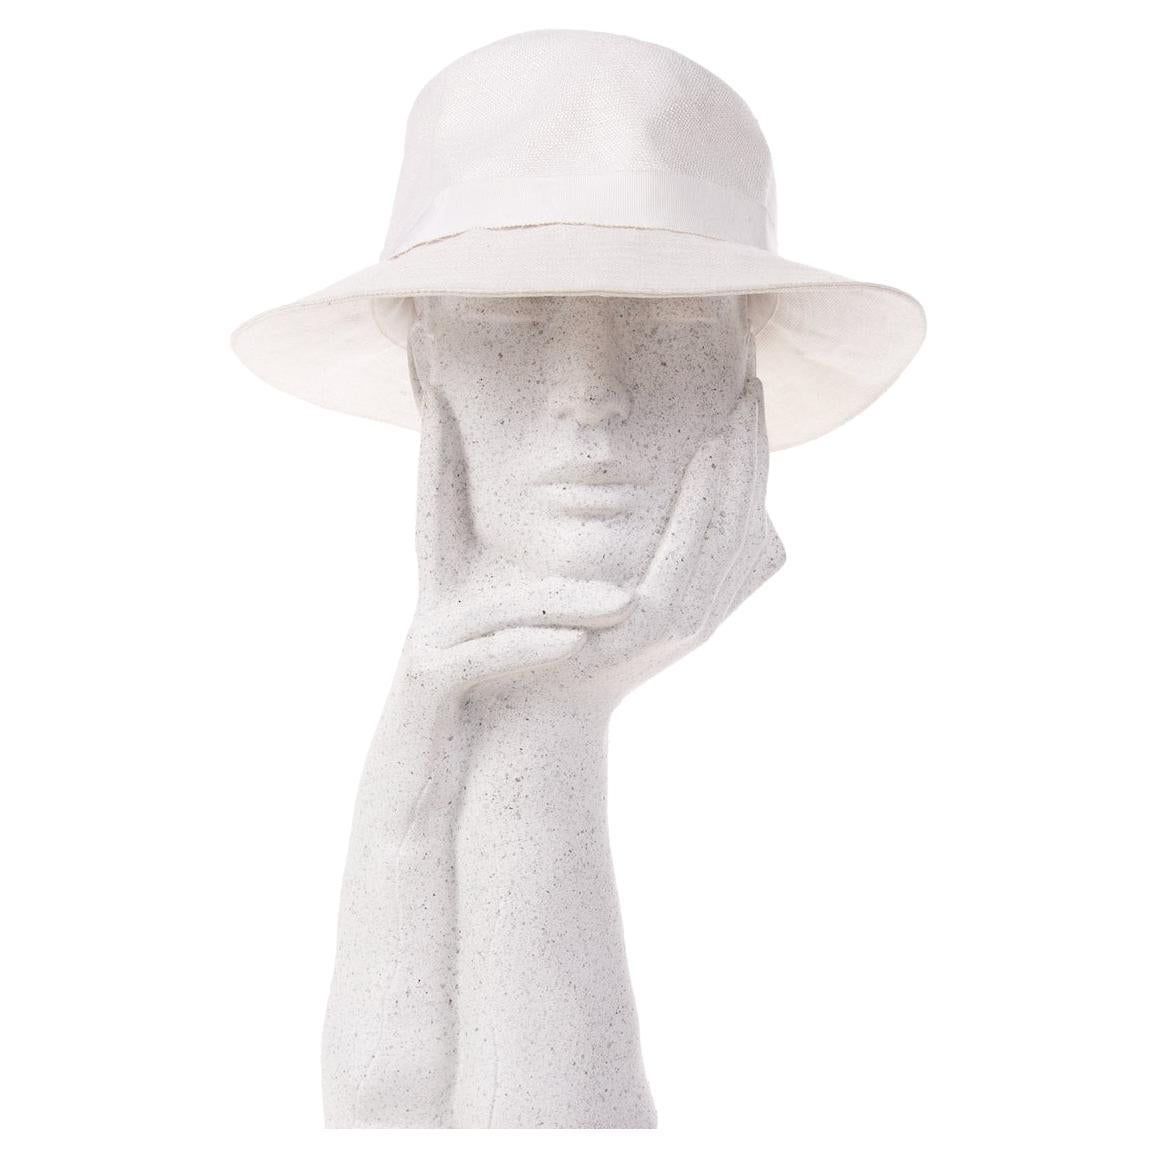 Louis Vuitton Nigo Hat - 3 For Sale on 1stDibs